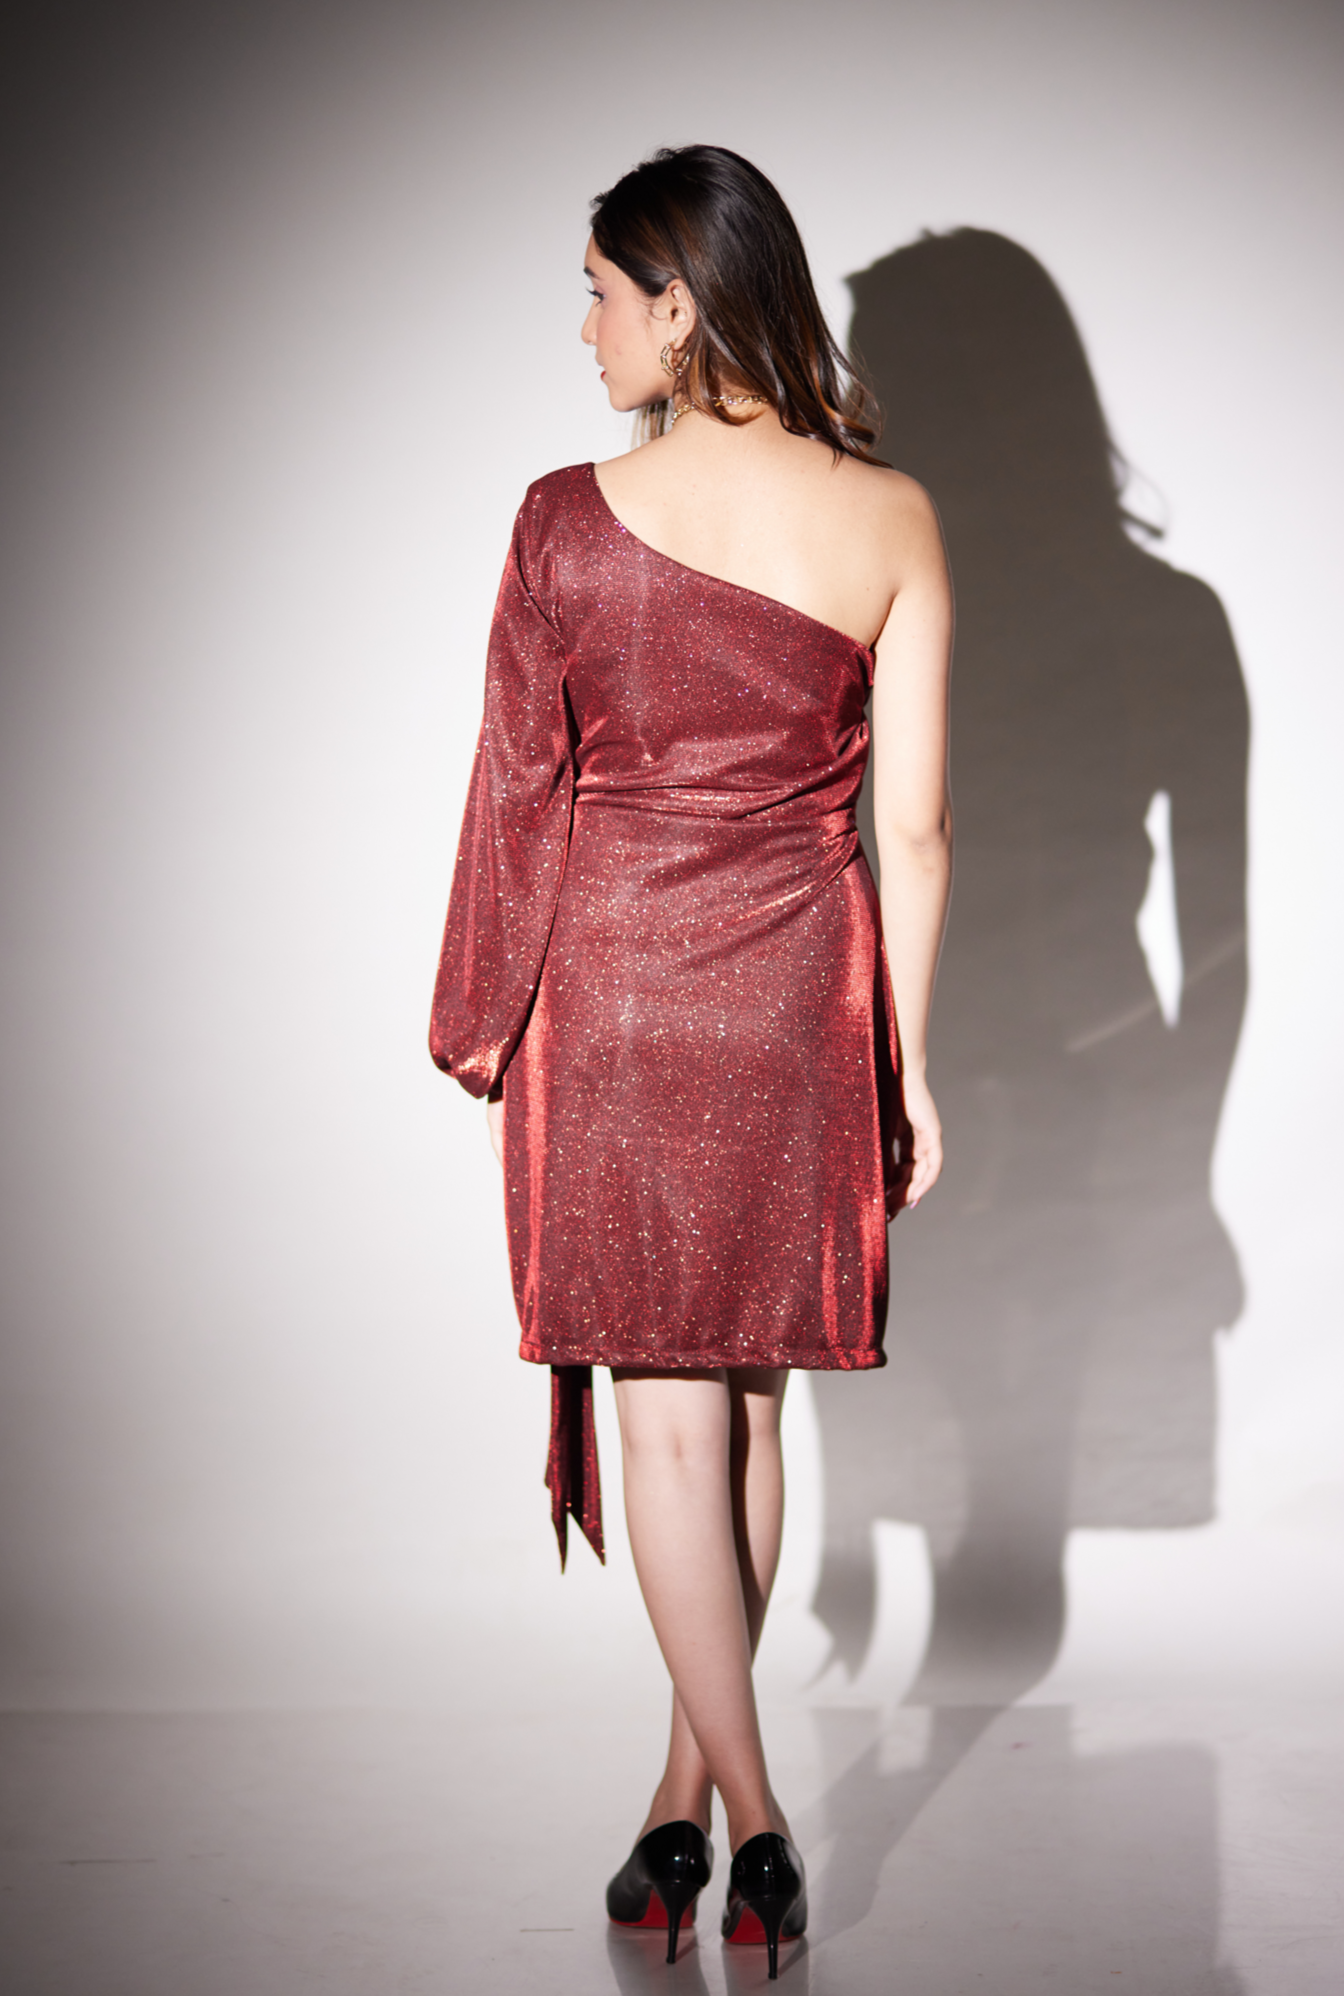 Shimmer Bodycon Dress丨Urbanic | Most Favourite